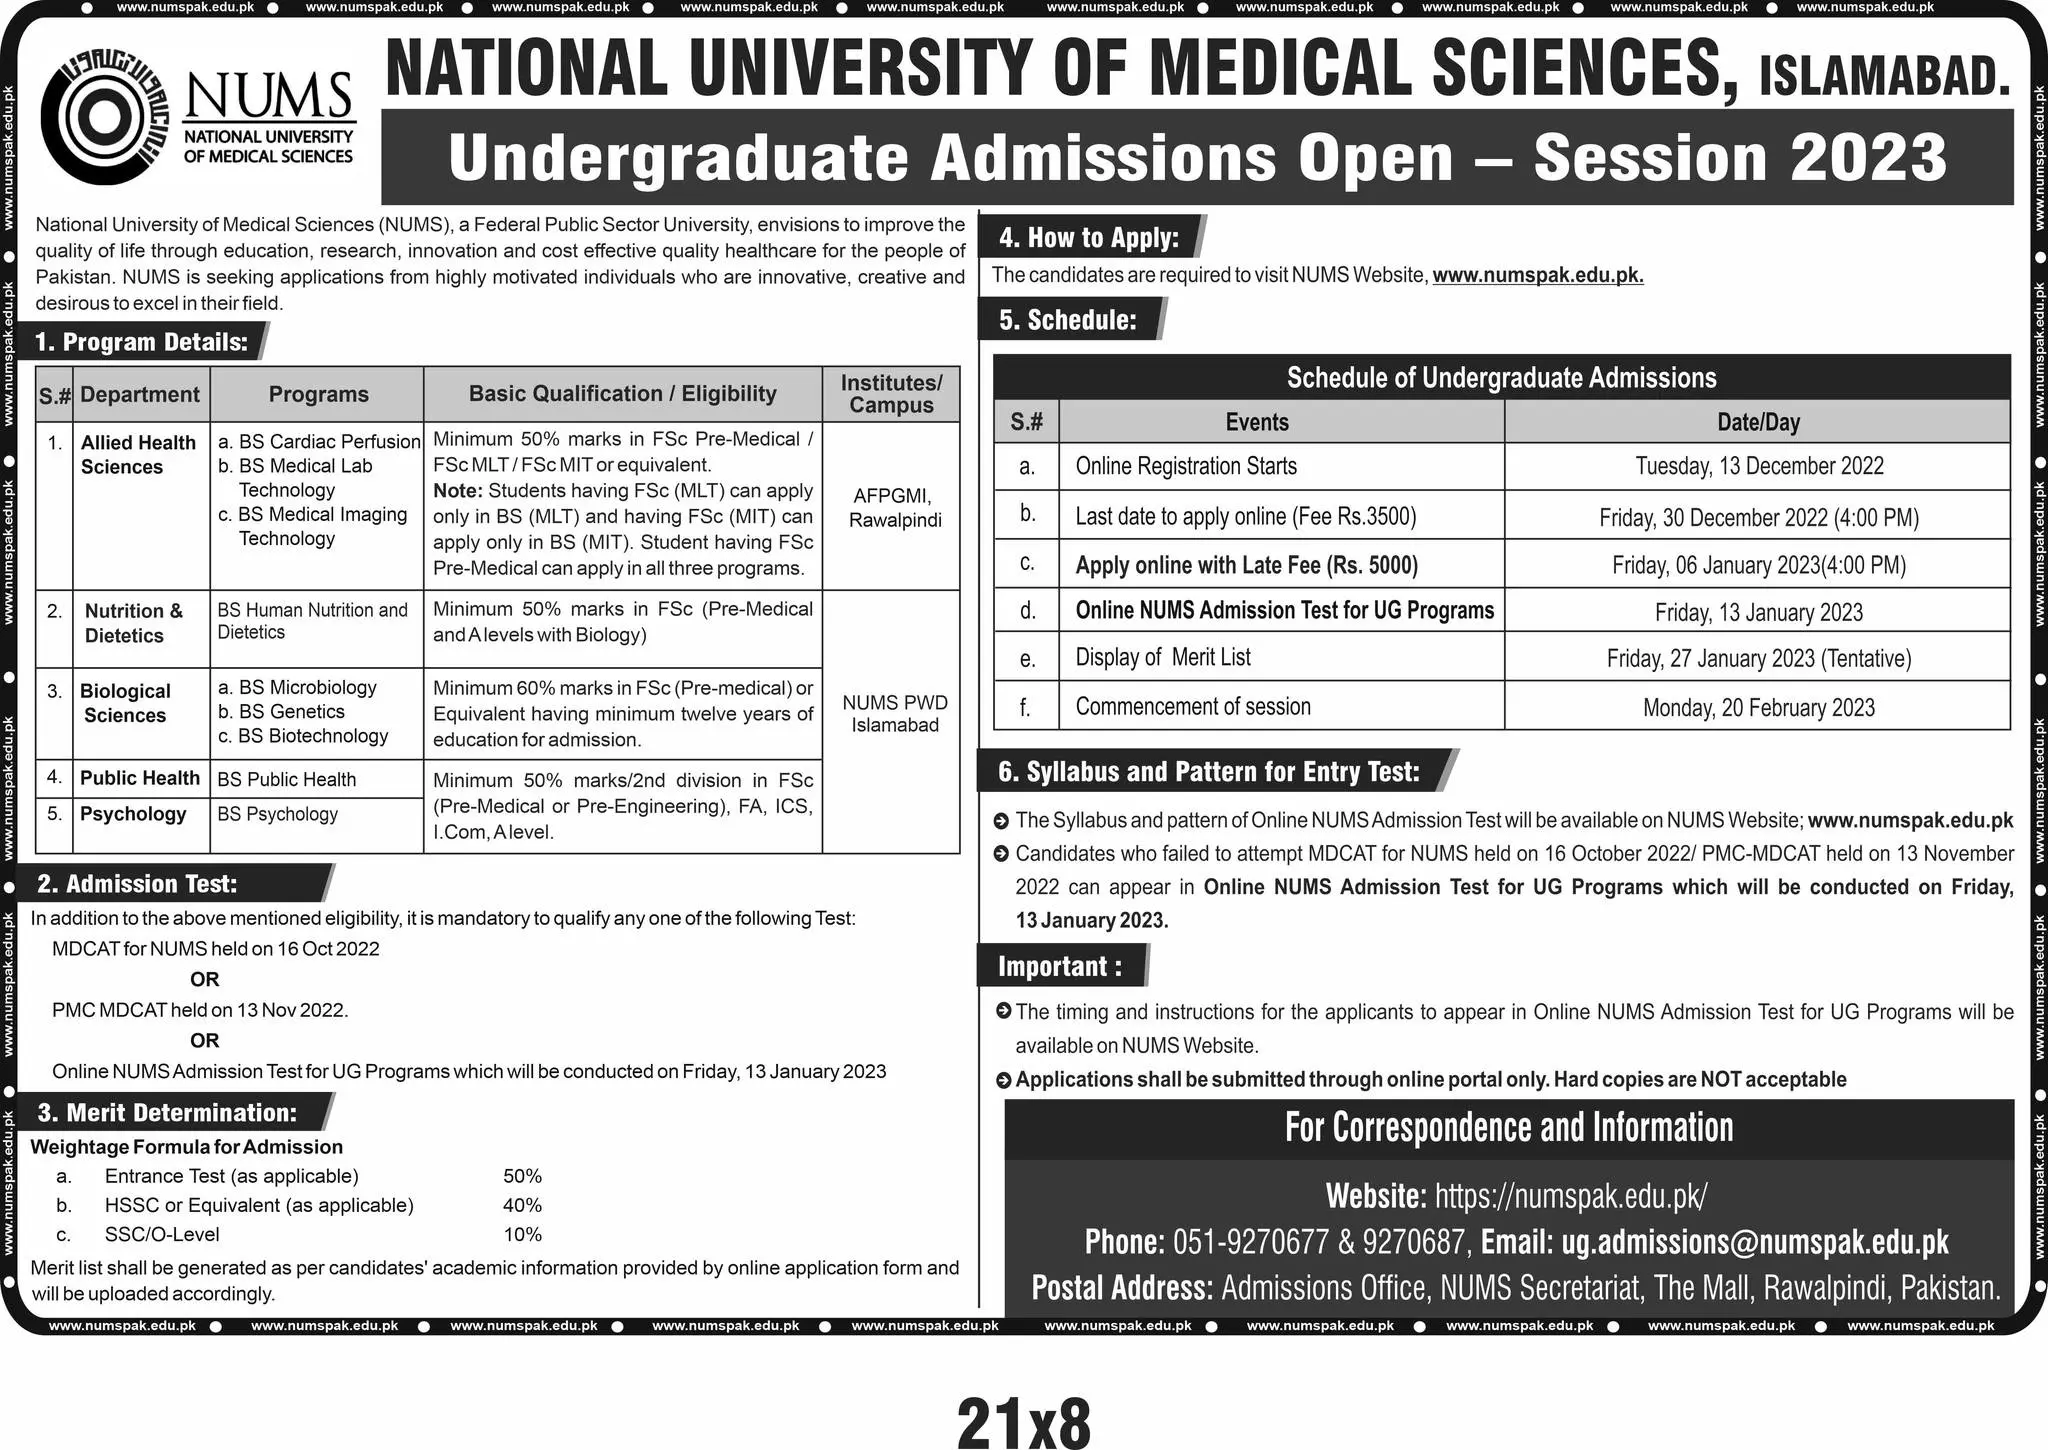 National University of Medical Sciences Admission 2023